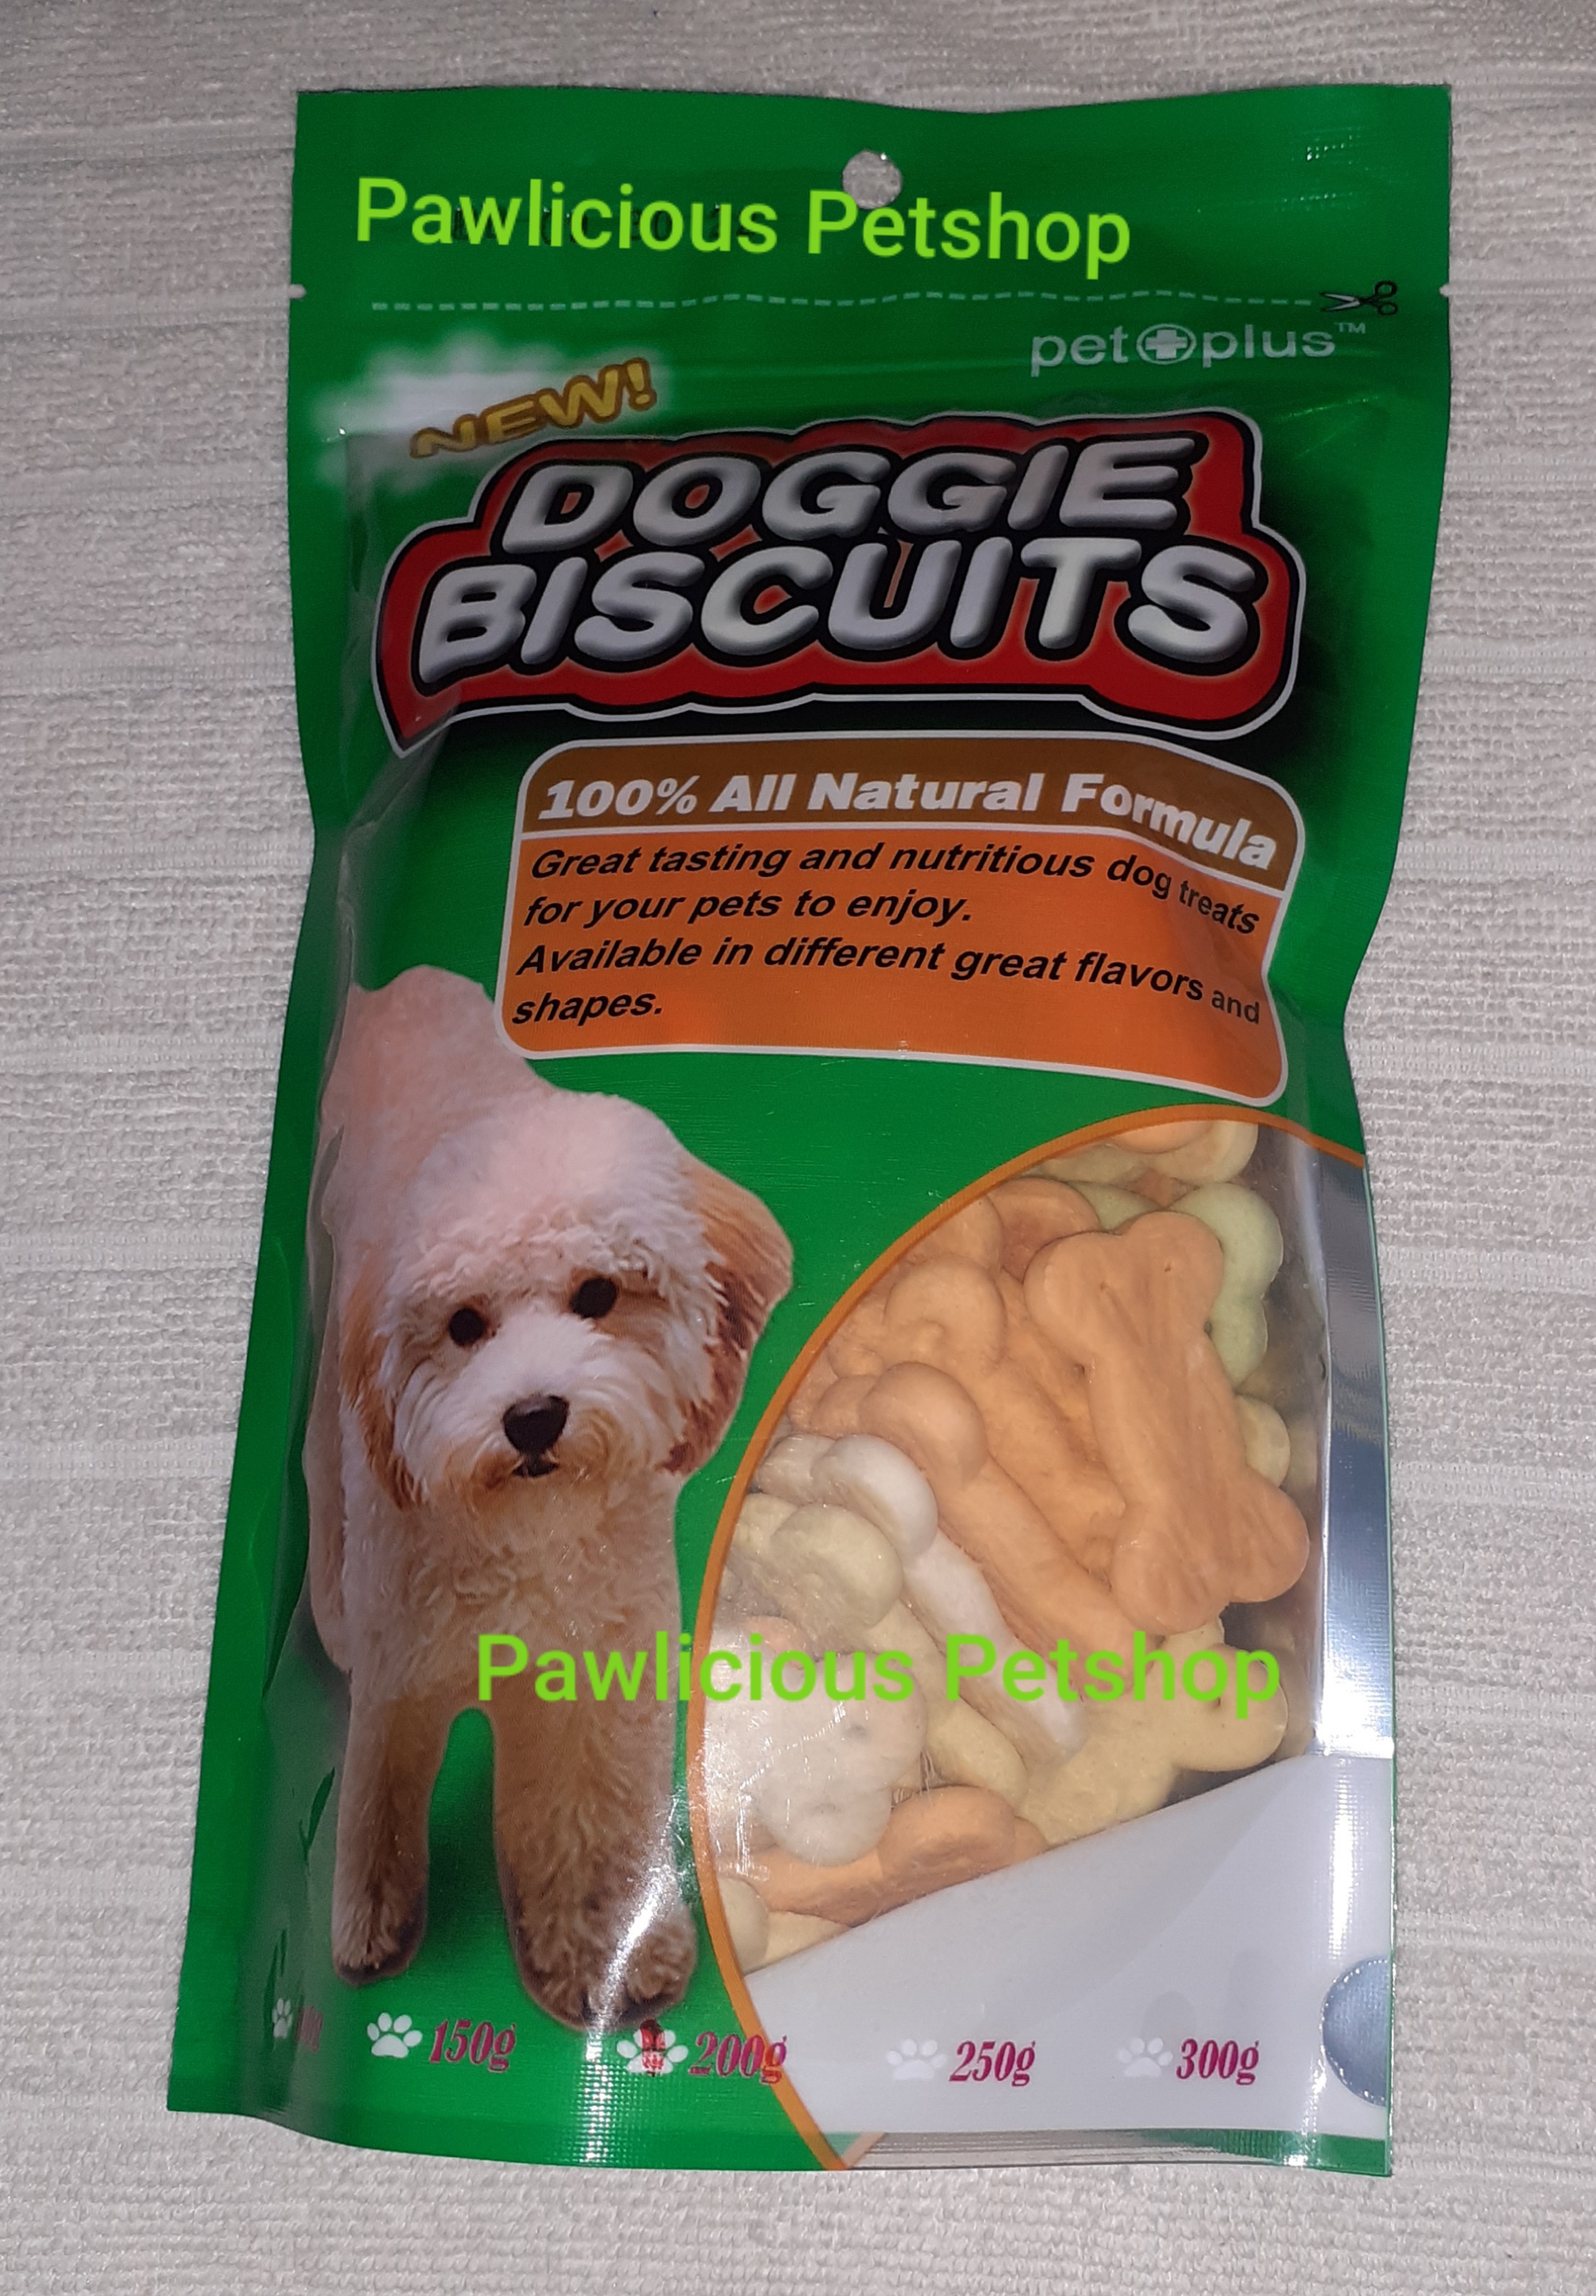 Doggie Biscuits 200g- Bone shape | Lazada PH